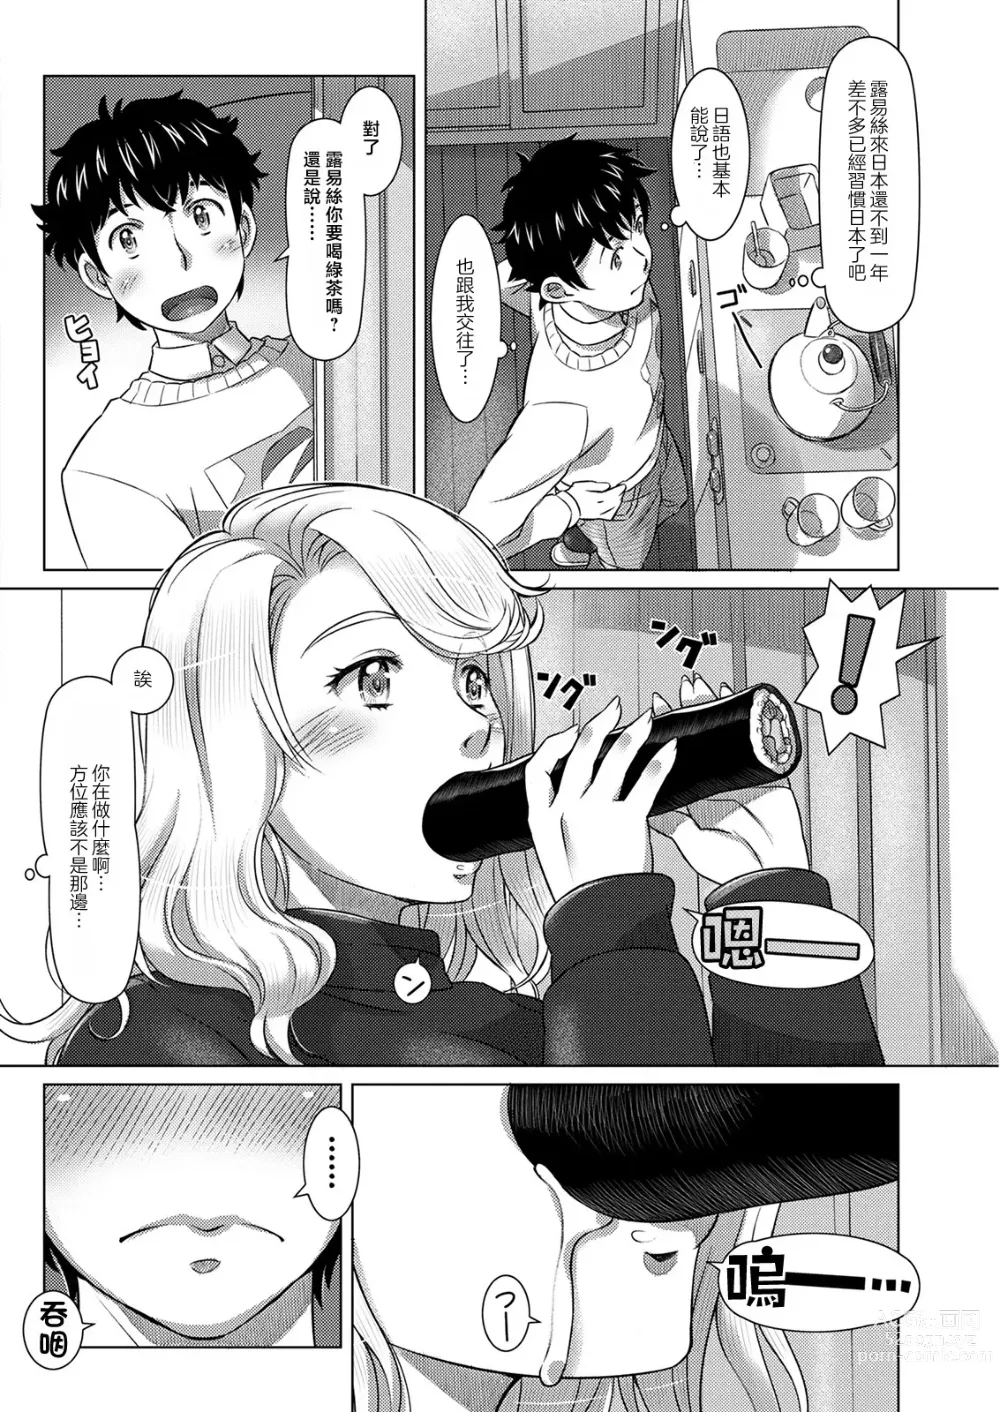 Page 6 of manga Setsubun Gokko